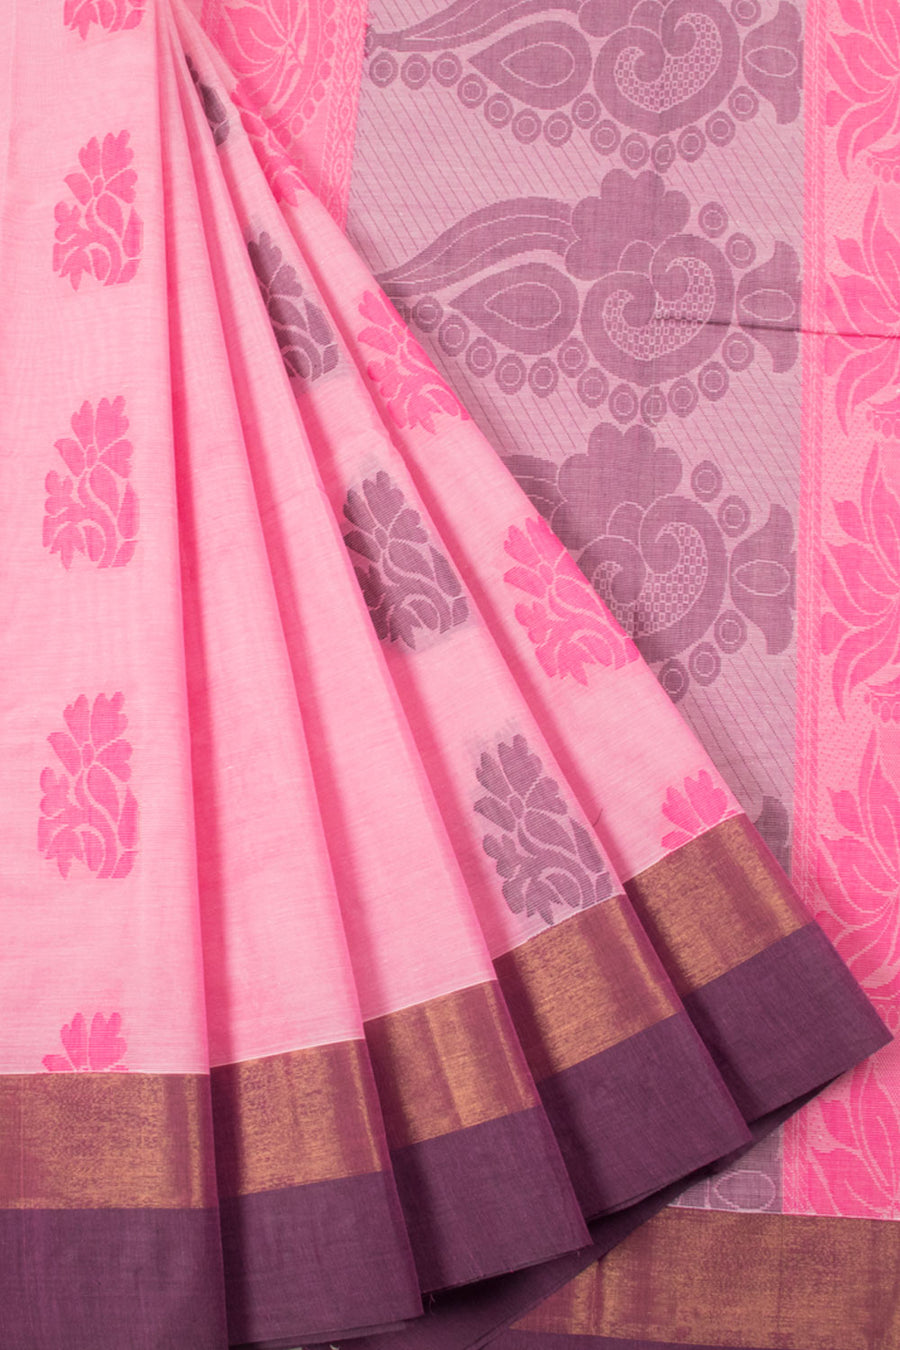 Pink Handwoven Kovai Cotton Saree with Floral Motifs and Zari Border